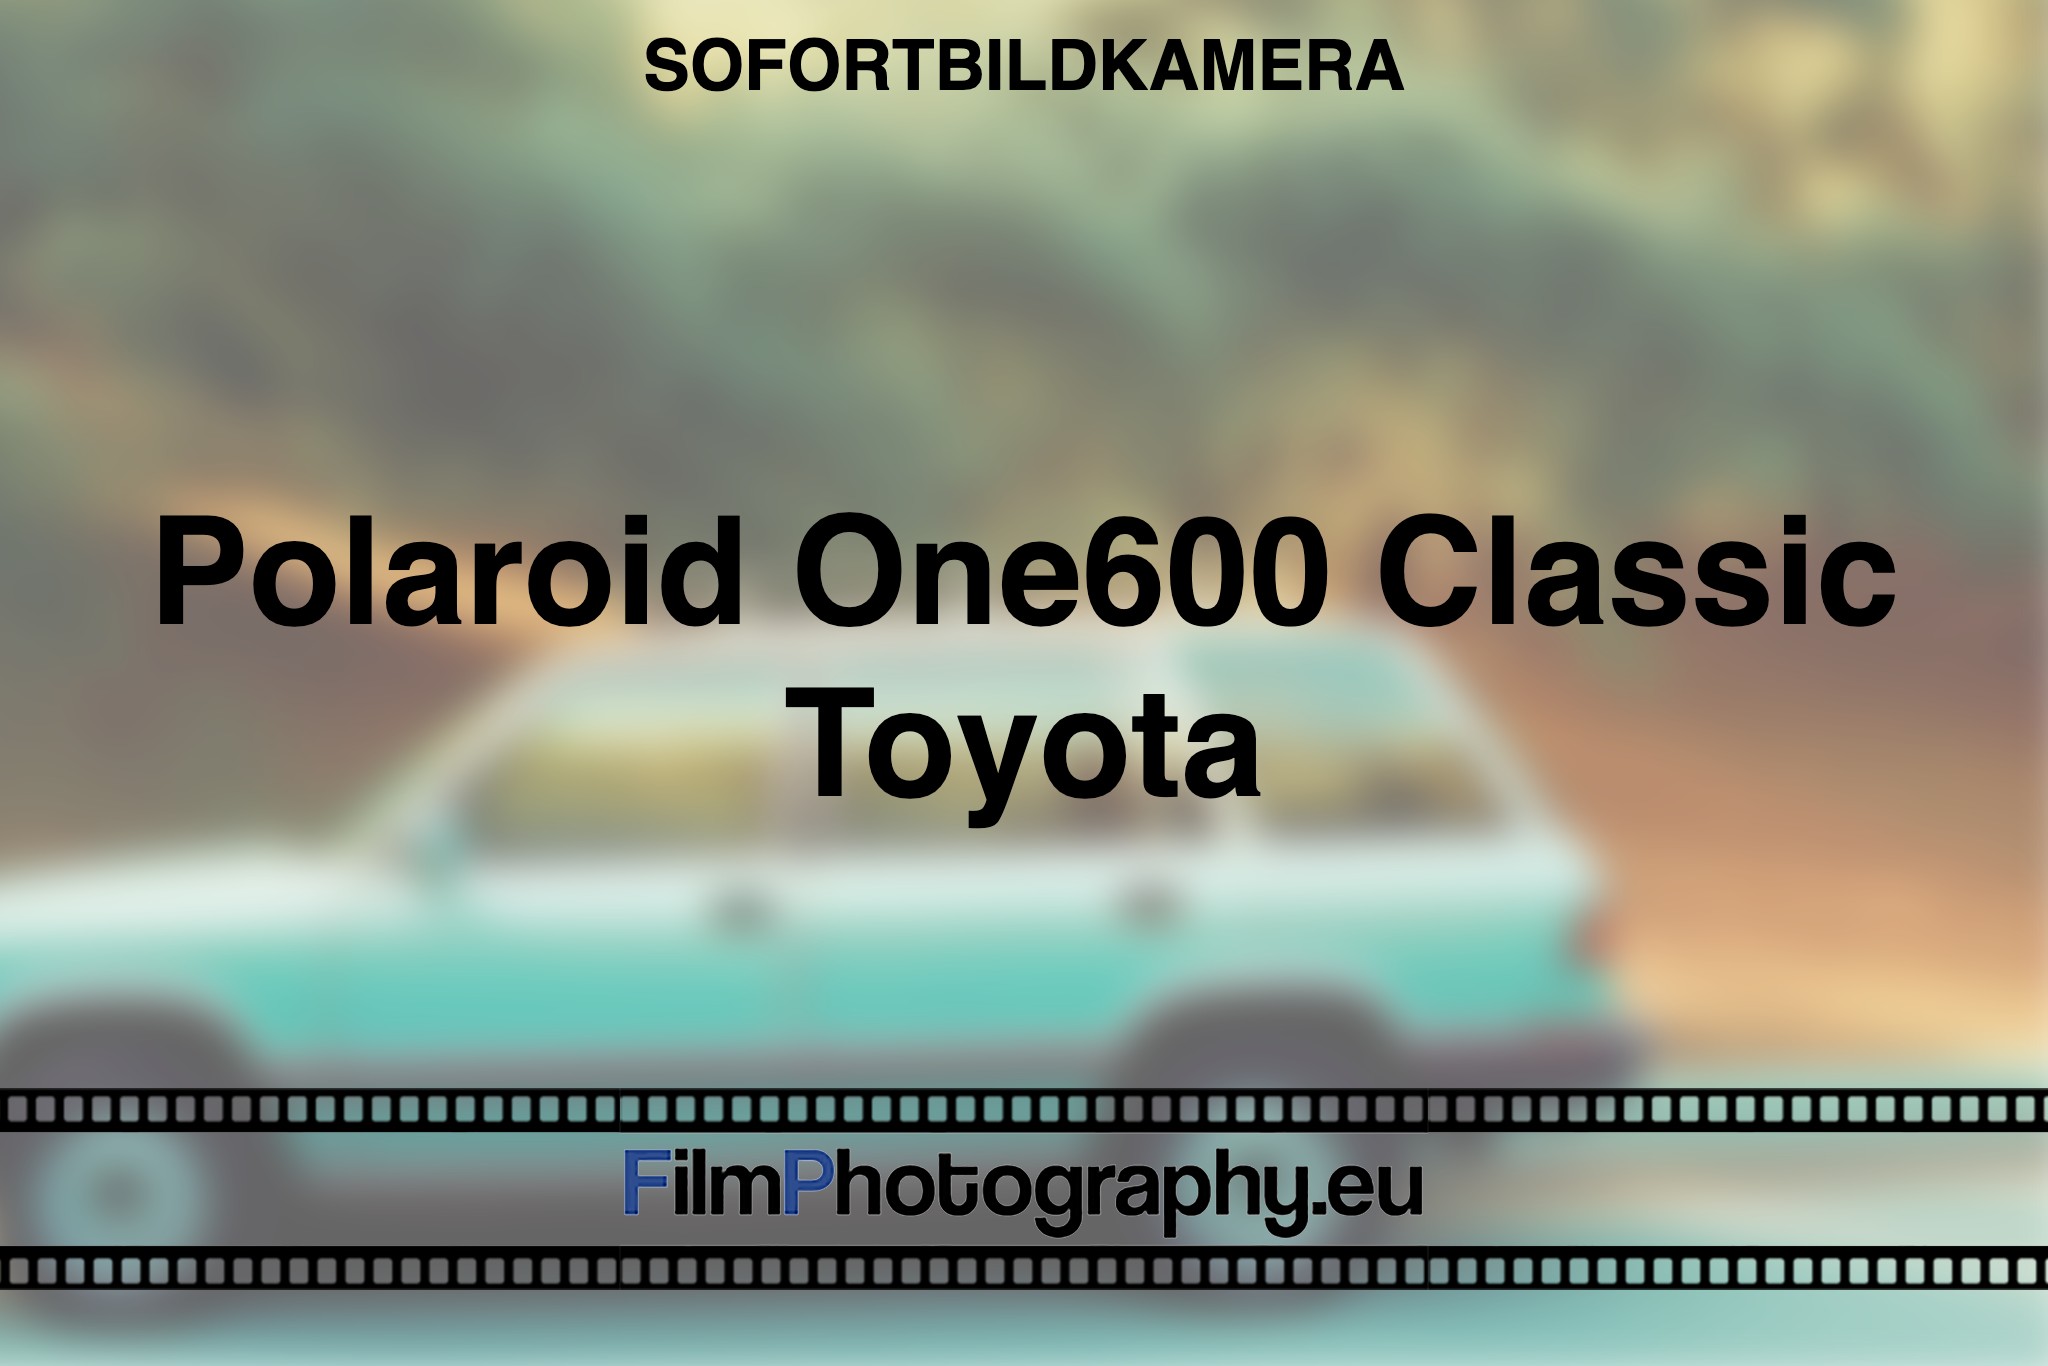 polaroid-one600-classic-toyota-sofortbildkamera-fp-bnv